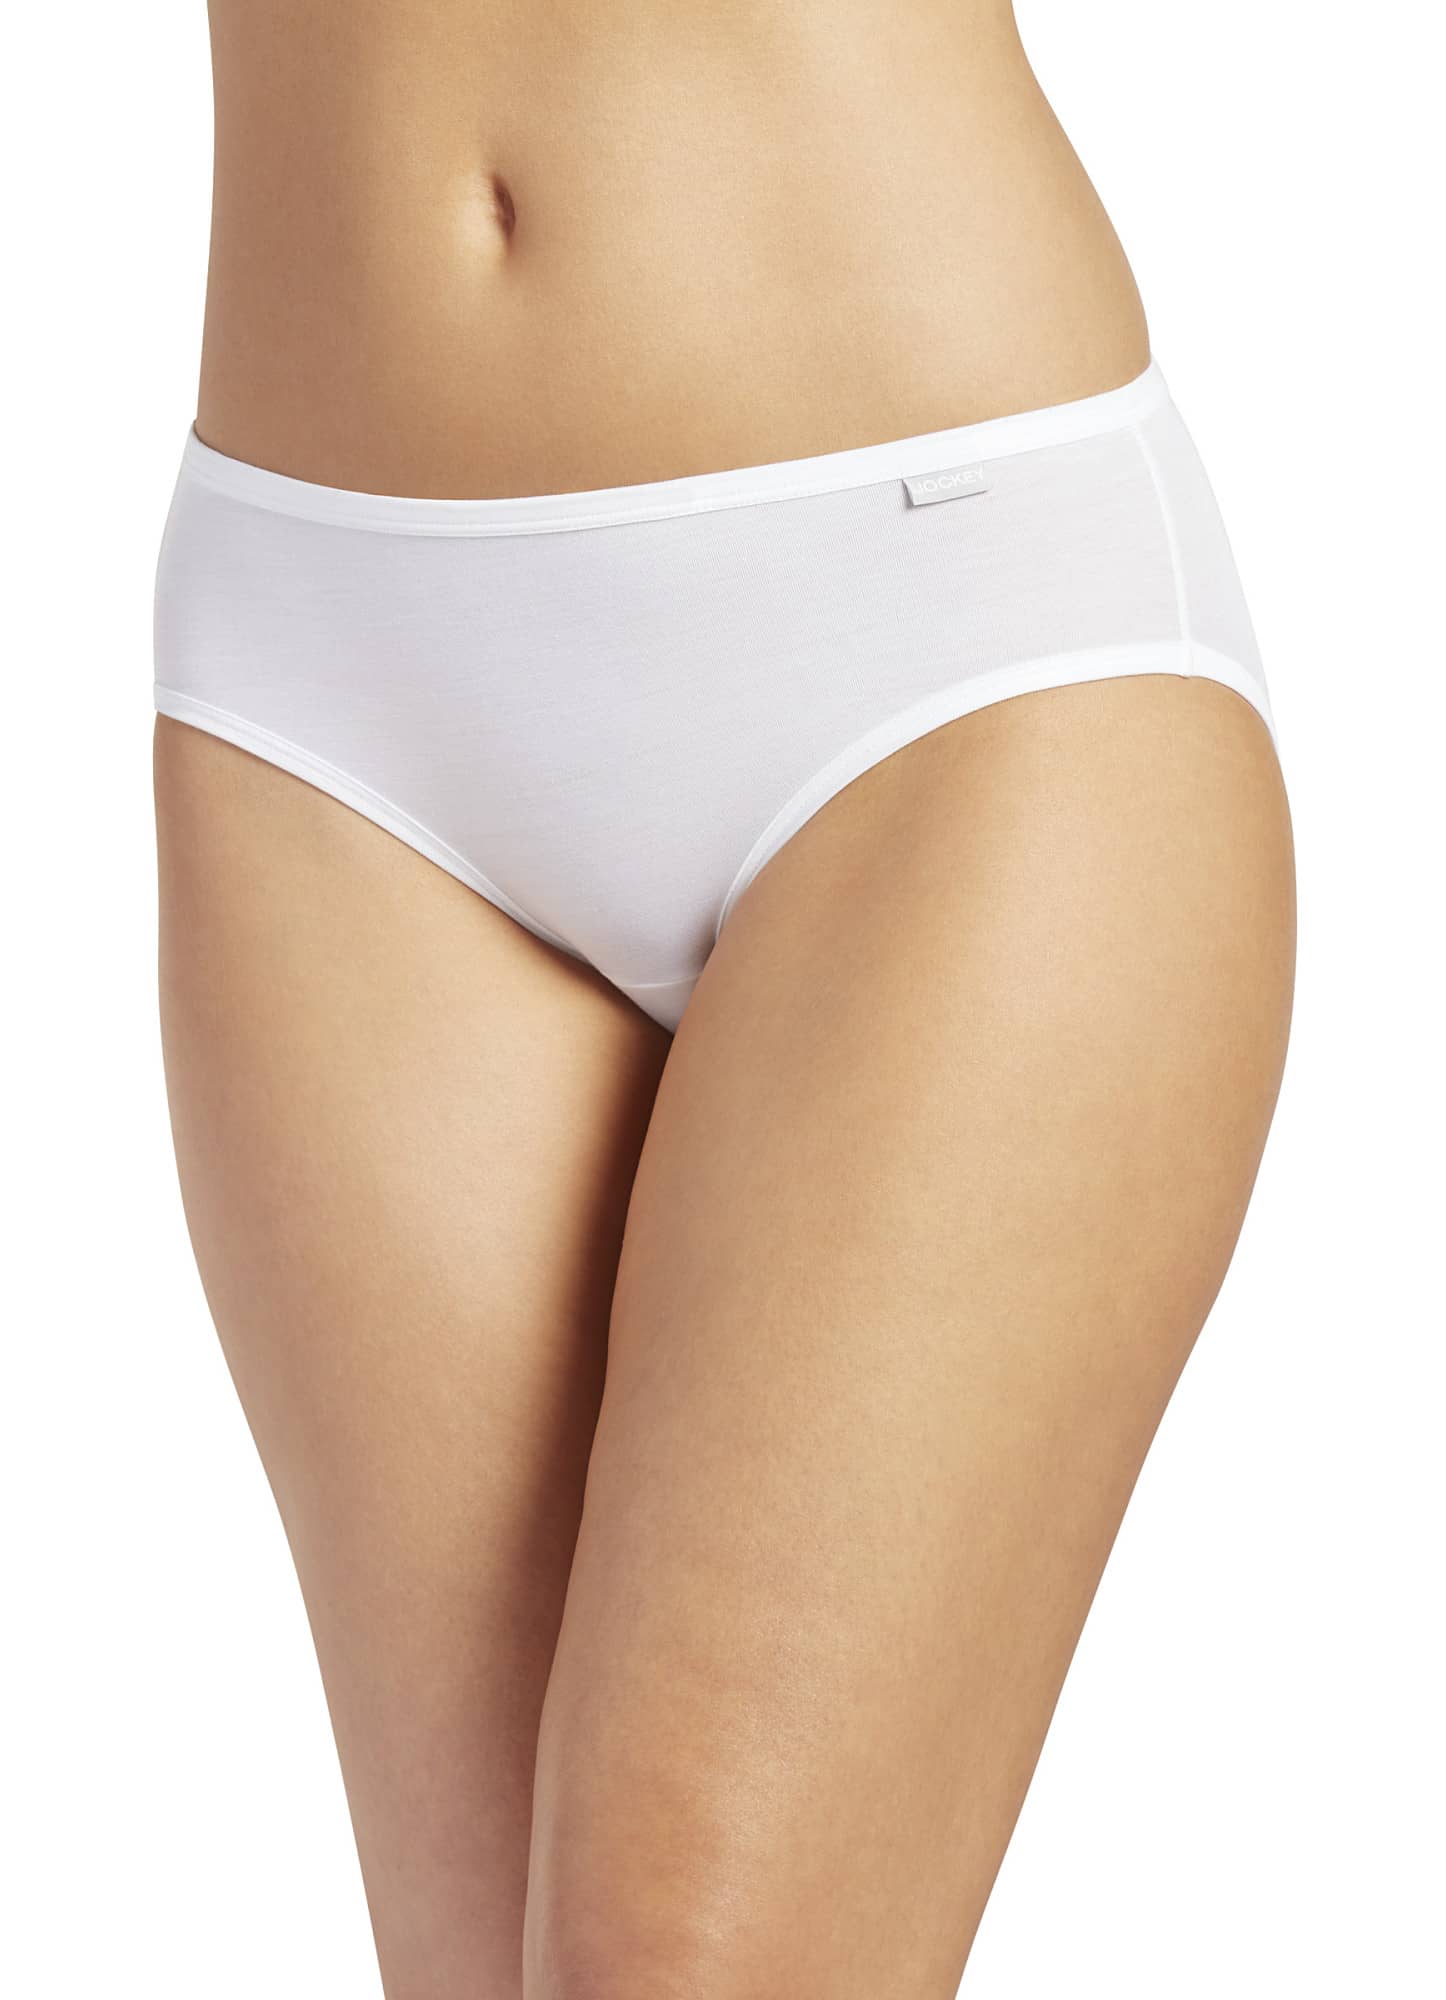 New Jockey Women's size 7 Bikini Underwear Supersoft Comfy